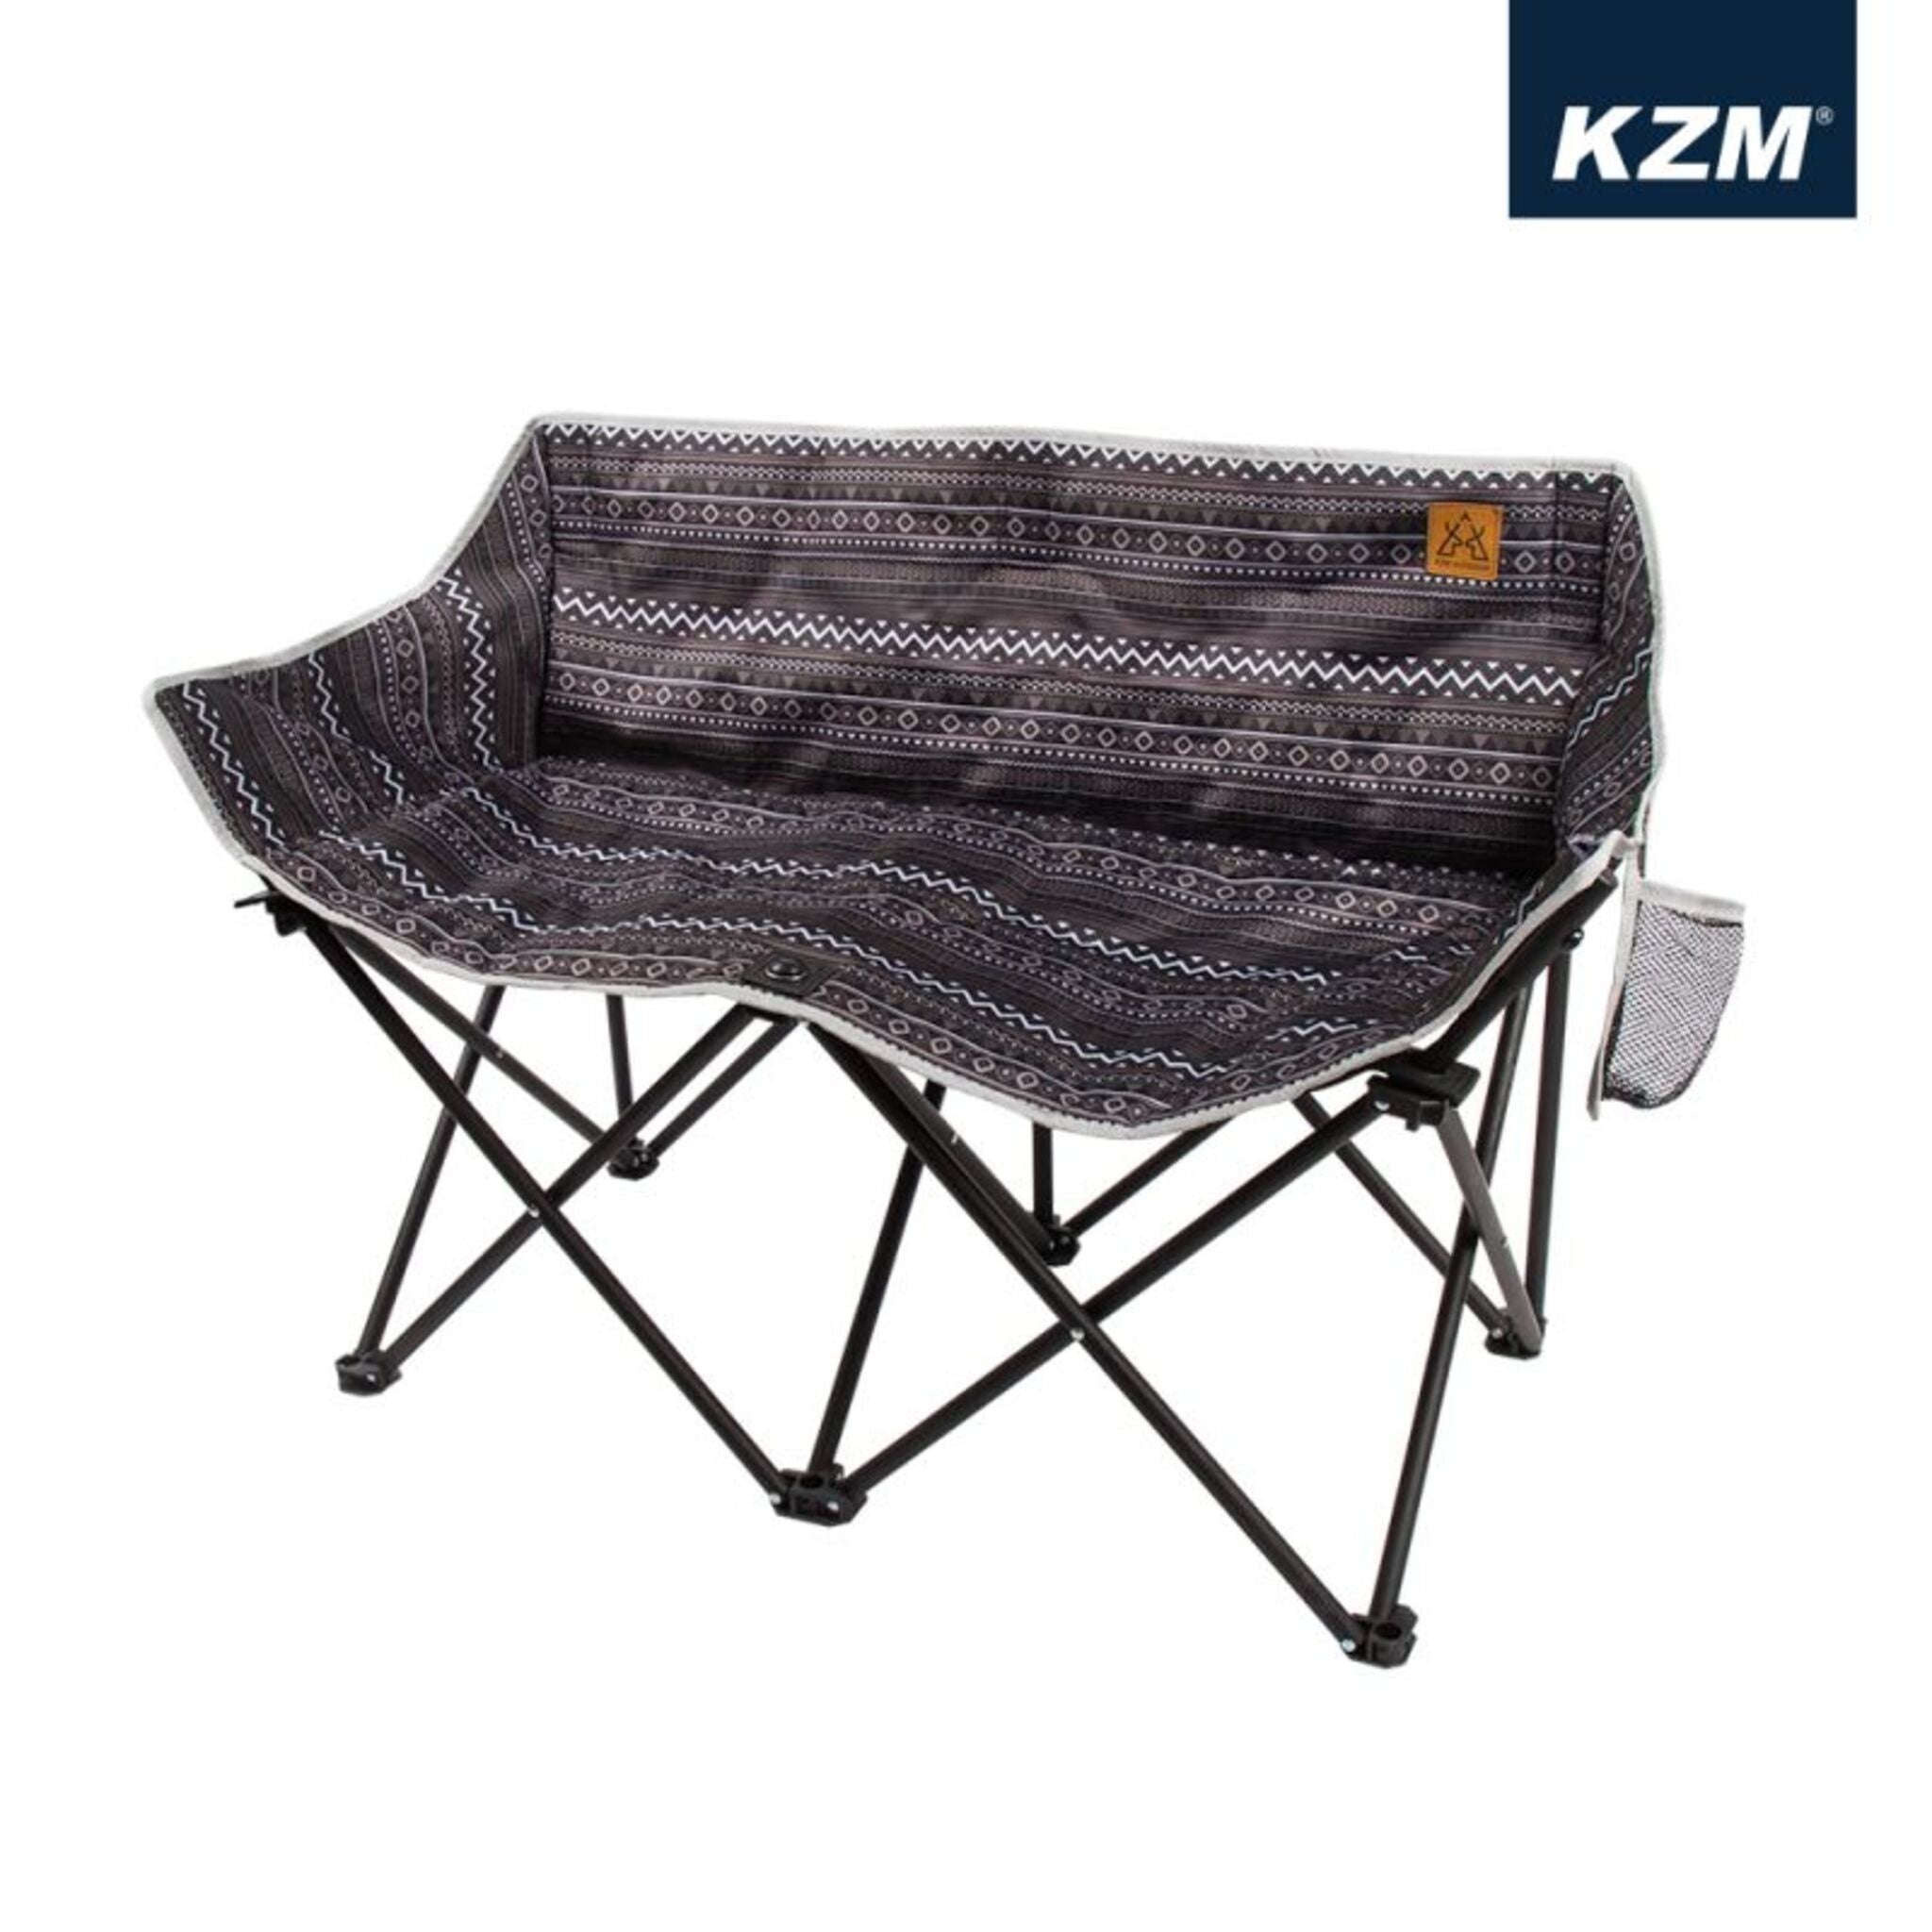 KZM 彩繪民族風月亮雙人折疊椅 K9T3C007